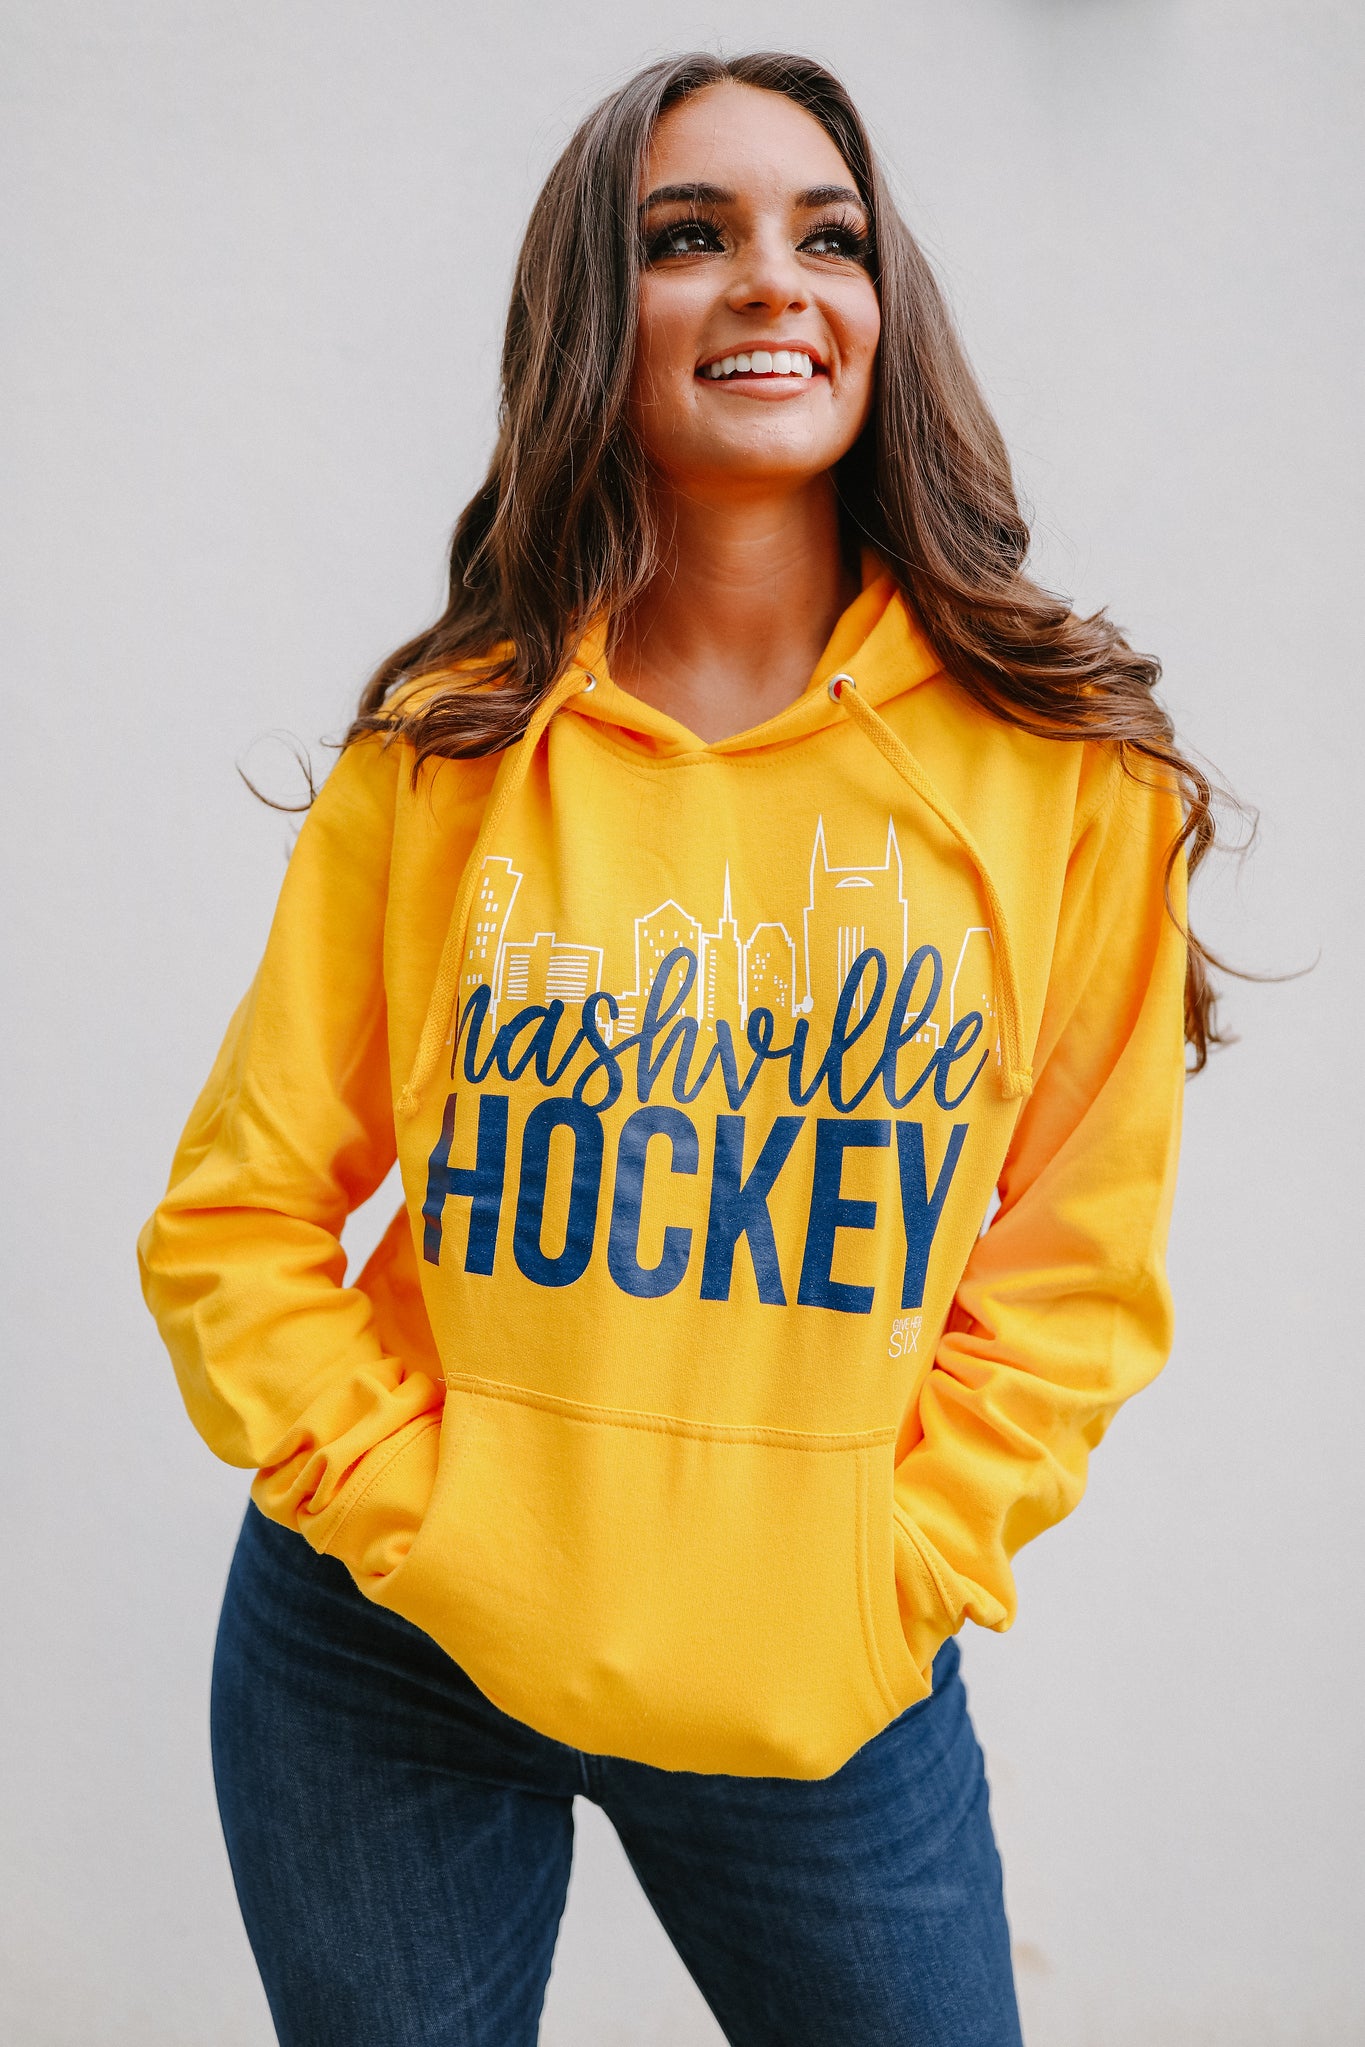 Nashville Hockey Gold Hoodie